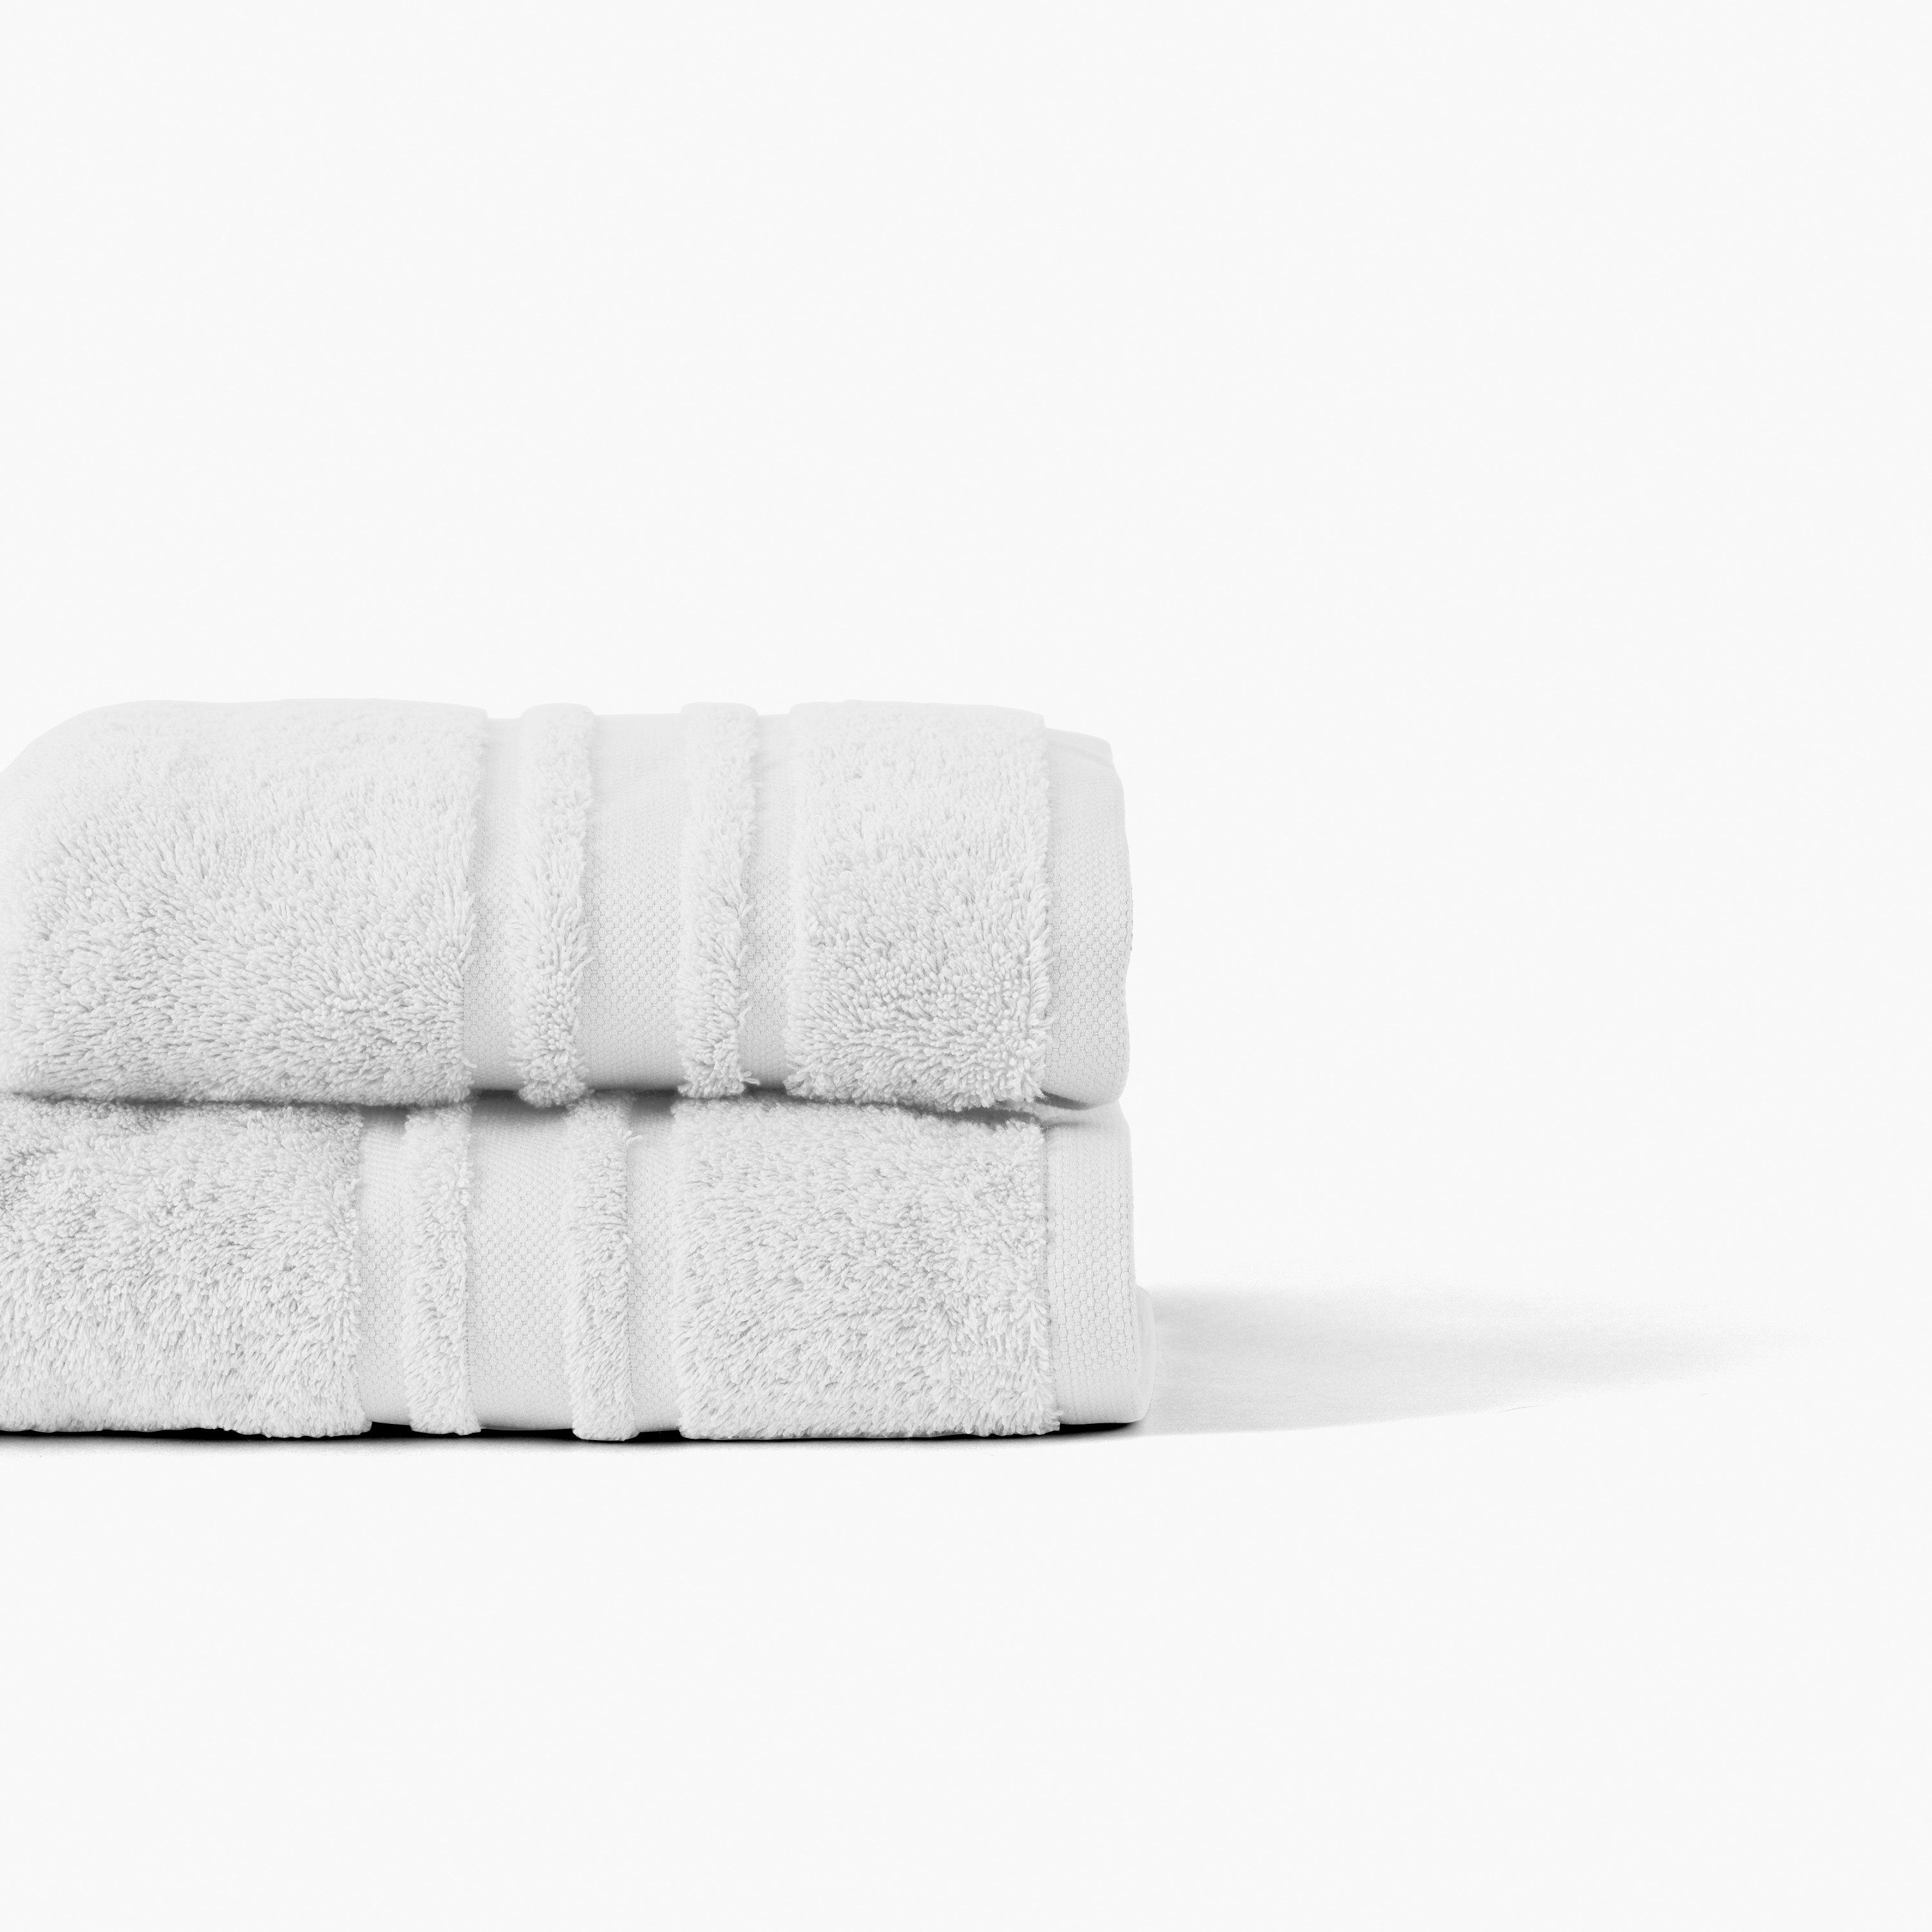 Lola II white cotton bath towel